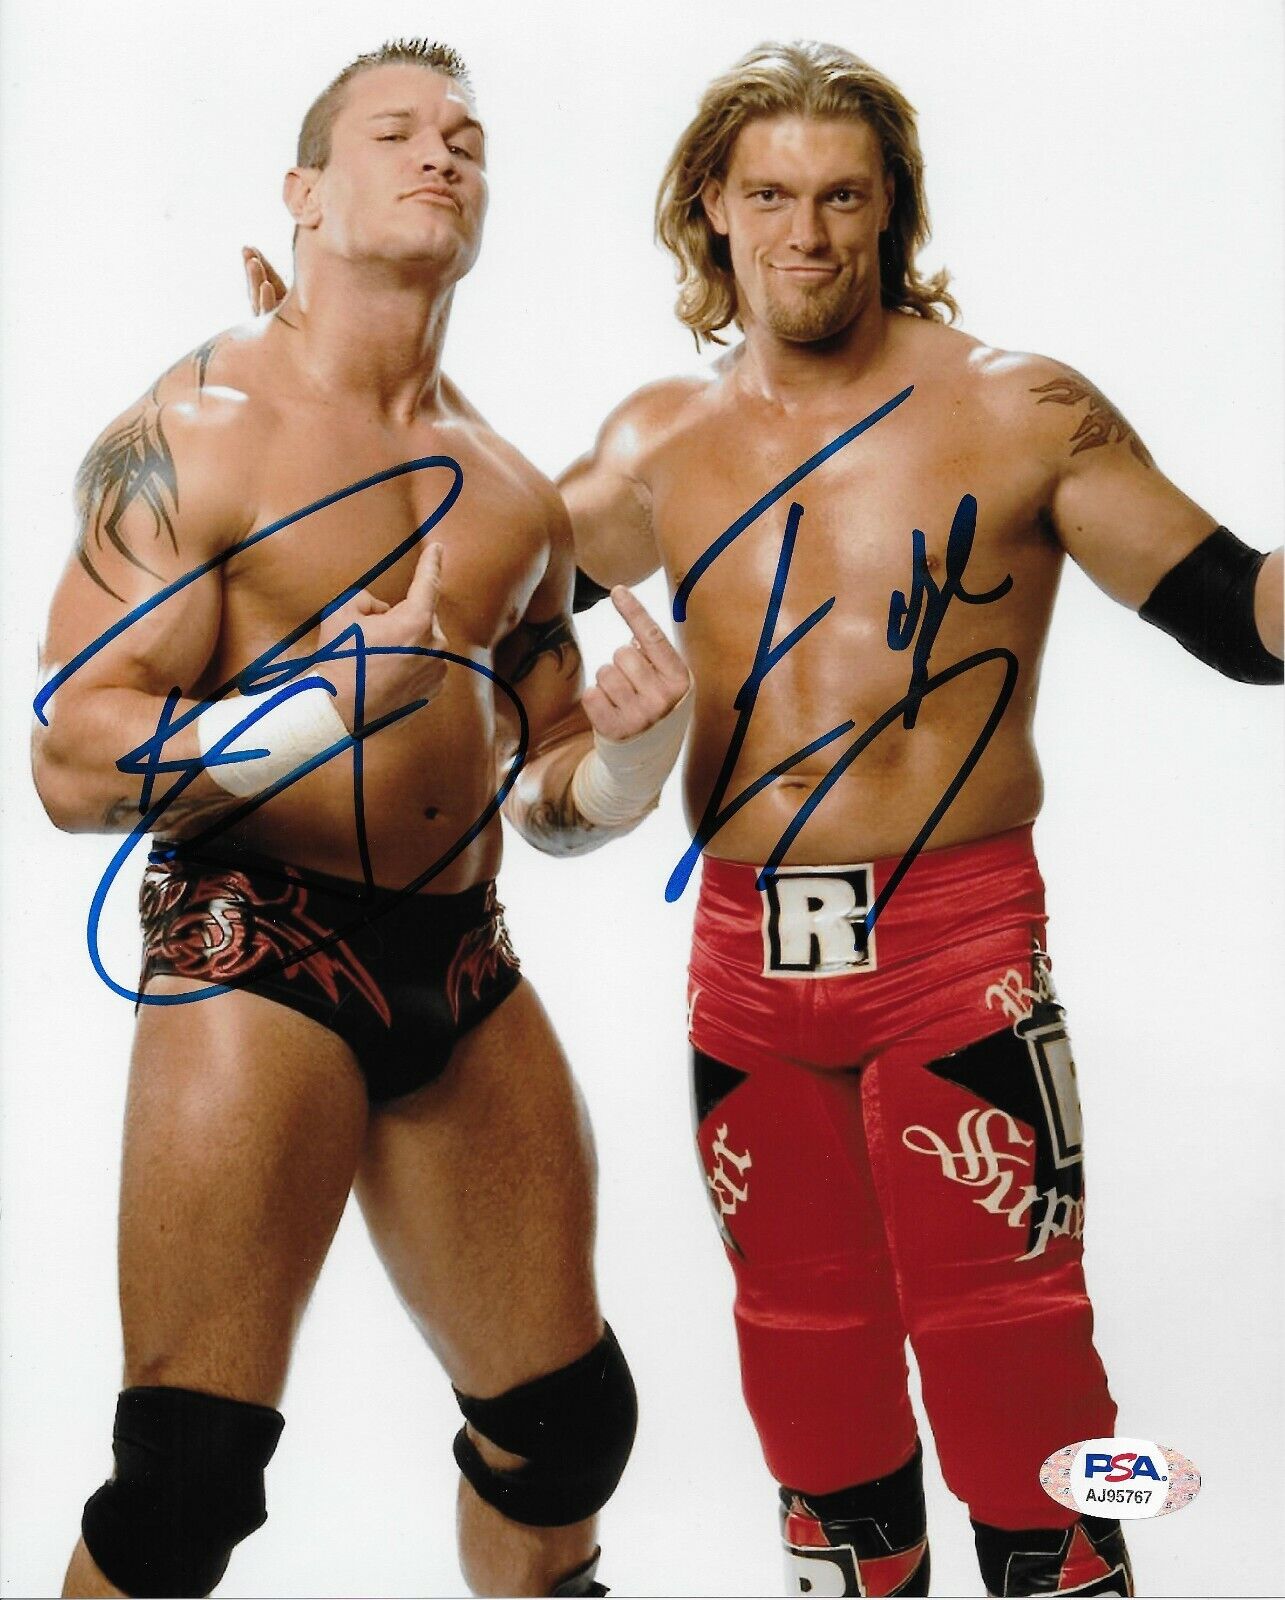 Randy Orton & Edge WWE Rated RKO Signed Autograph 8x10 Photo Poster painting w/ PSA COA